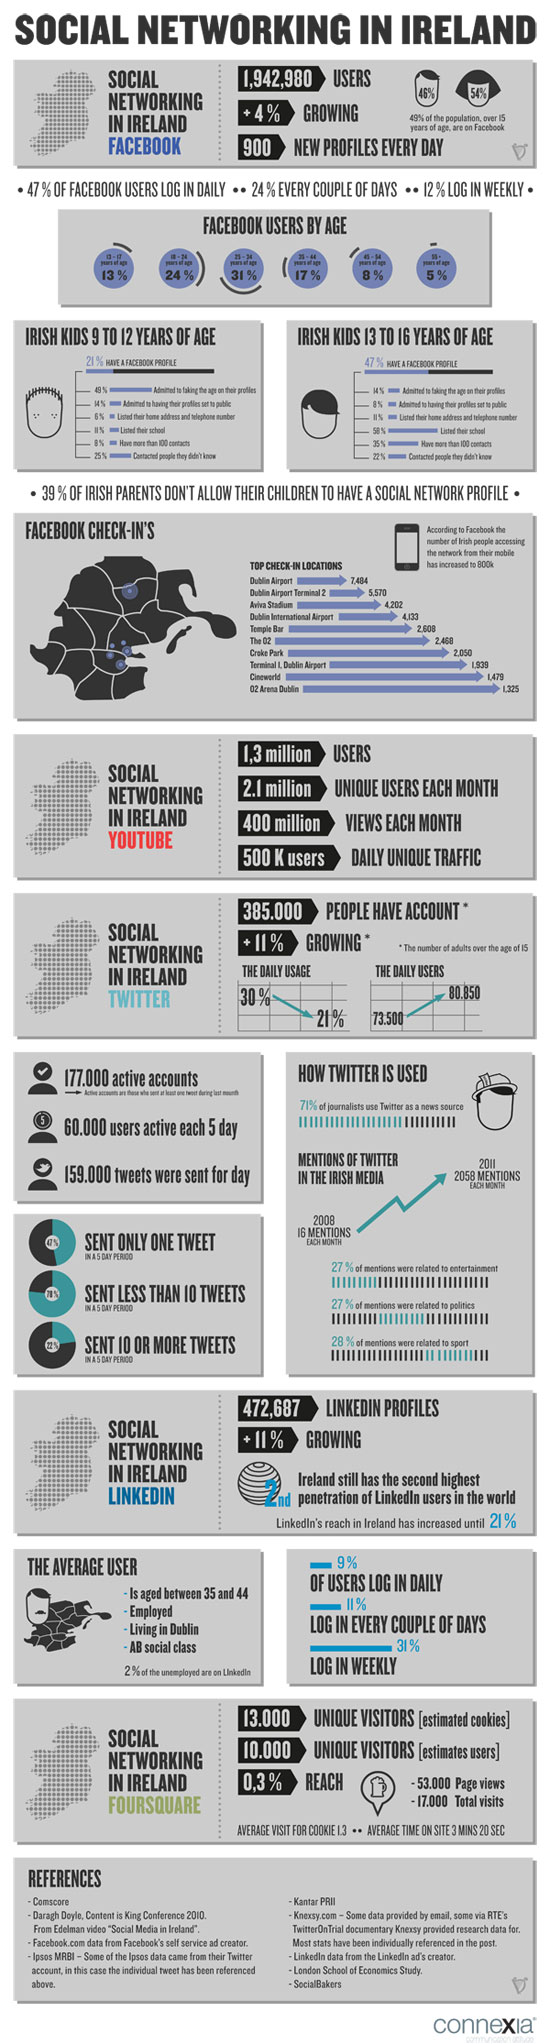 Social networking in Ireland